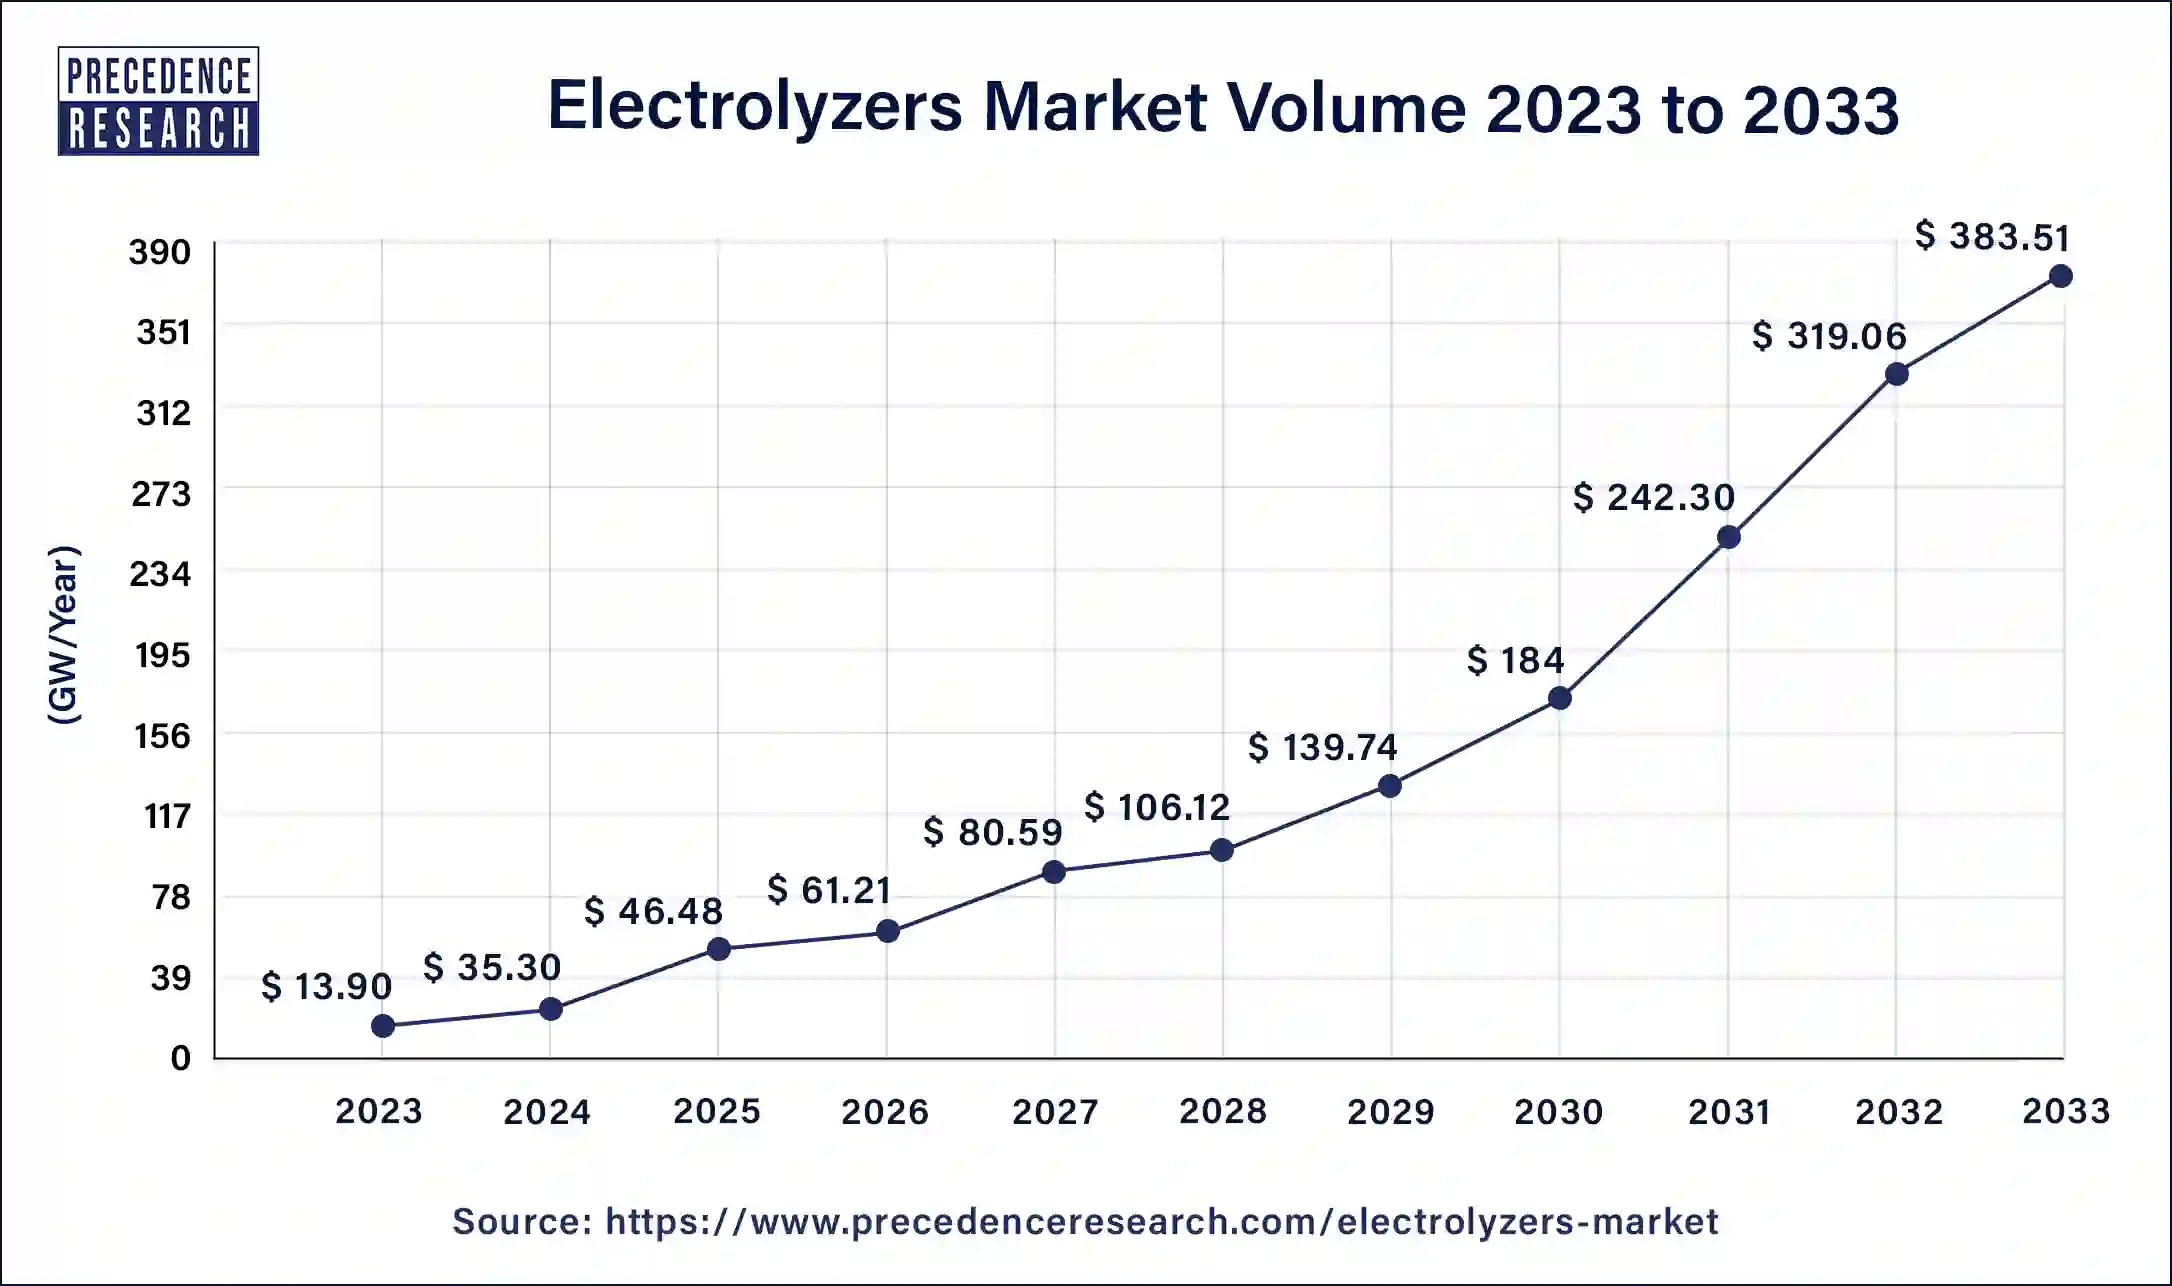 Electrolyzers Market Volume 2023 to 2033